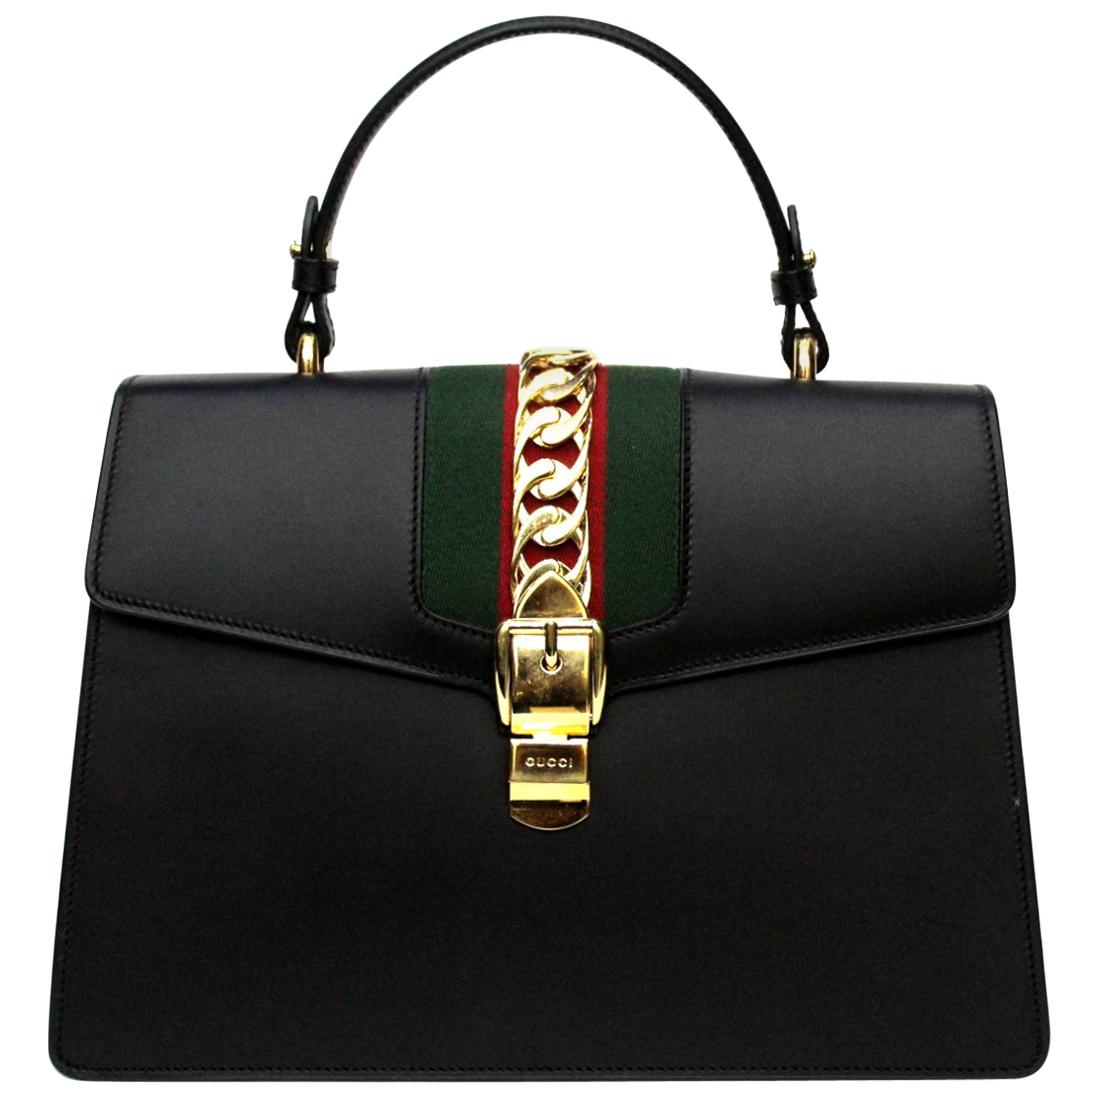 Gucci Sylvie Medium Black Leather Top Handle Bag